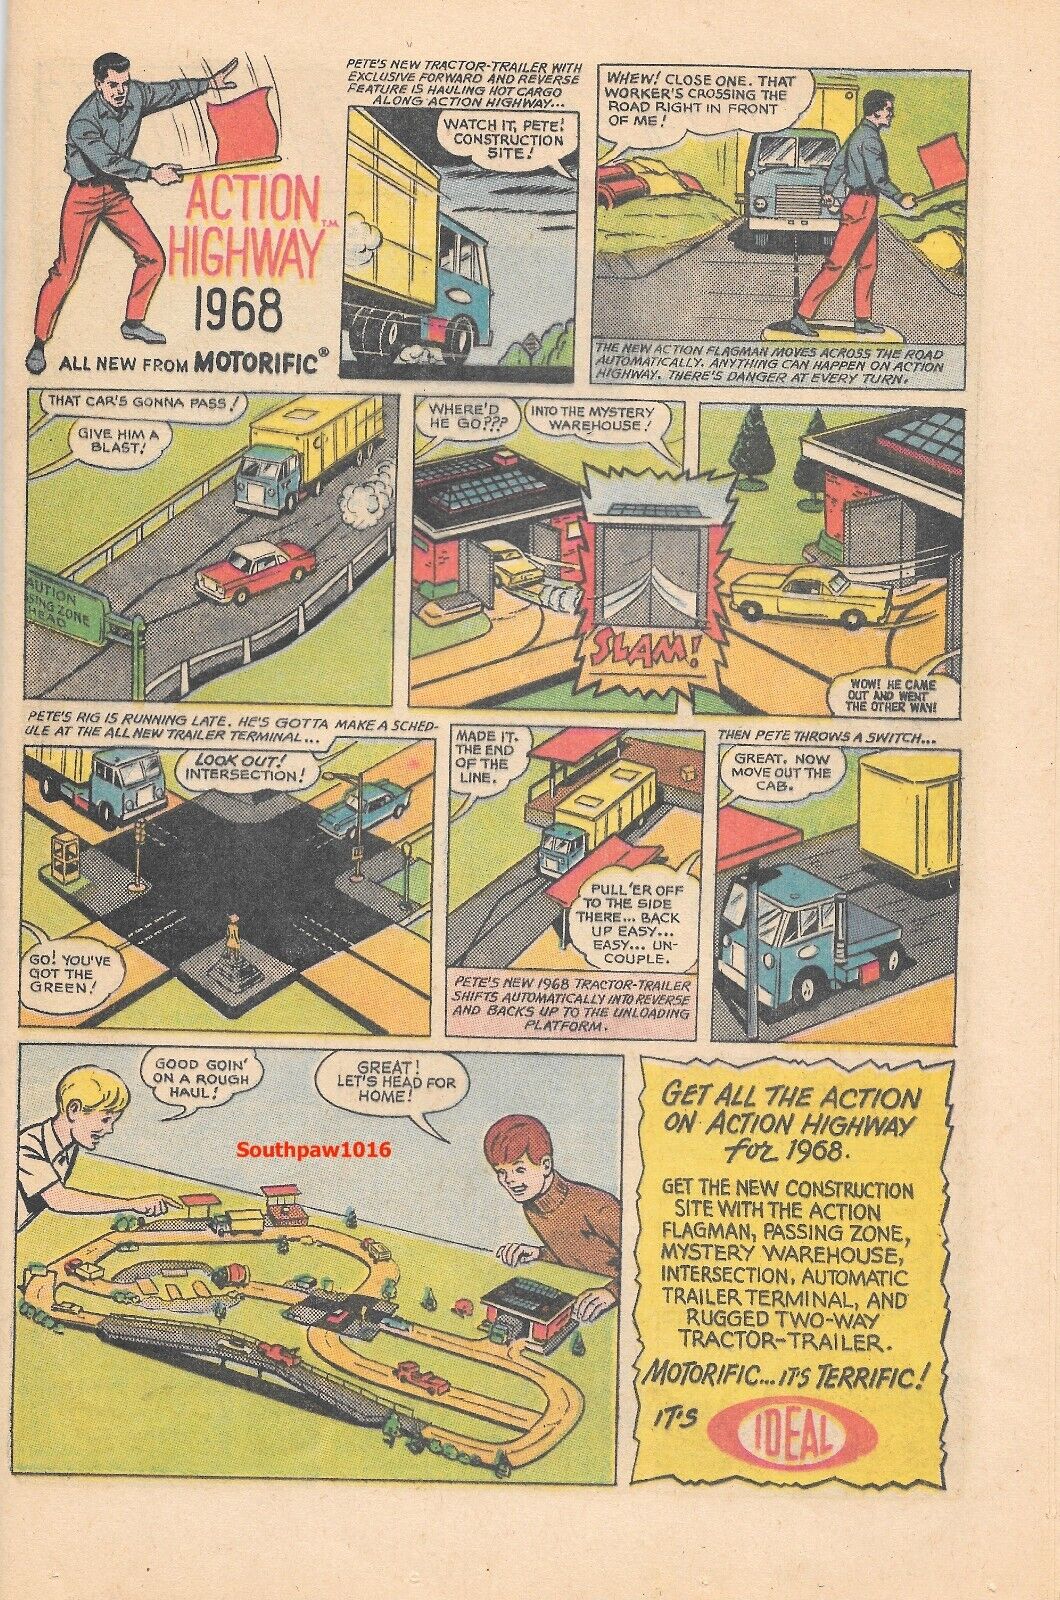 1968 Ideal Motorific Action Highway 1968 Original Vintage Print Ad